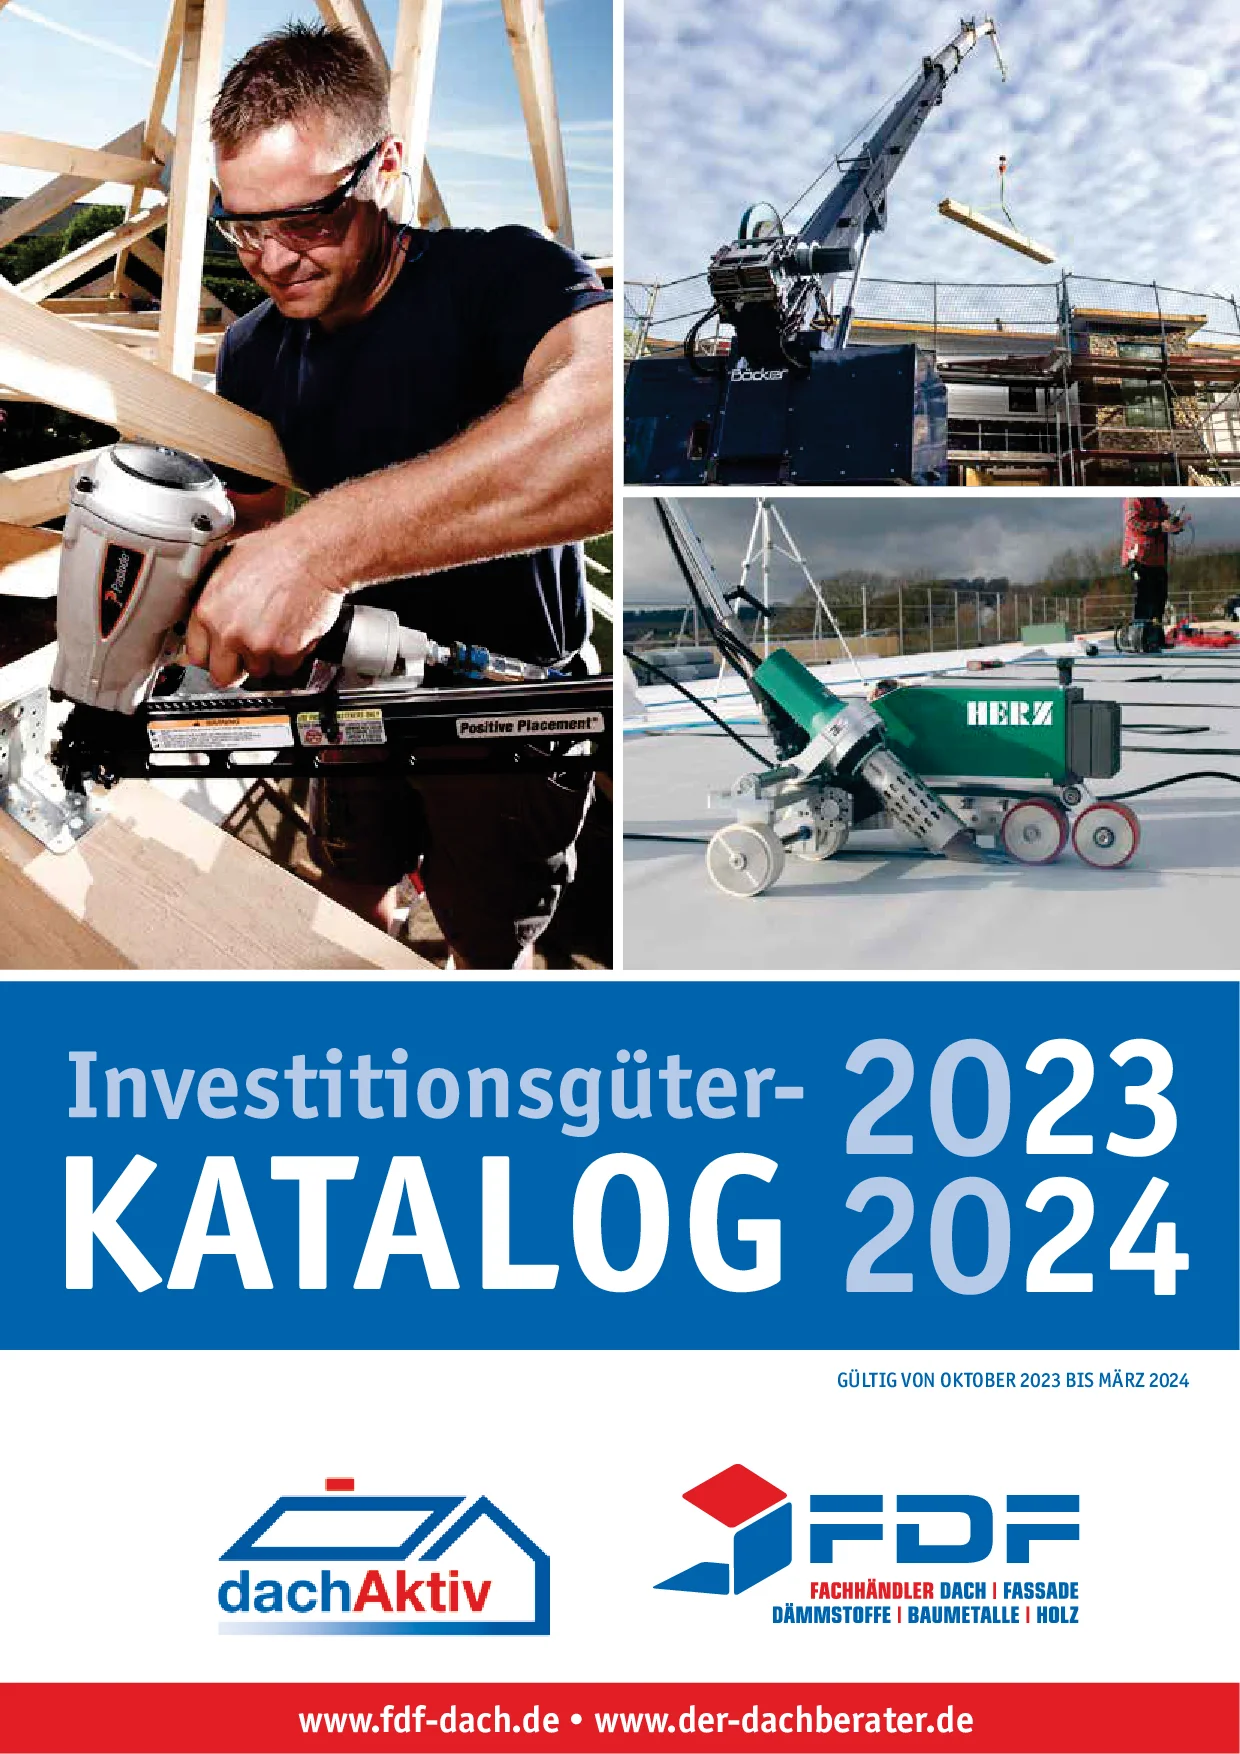 investitionsgueter-katalog-2022